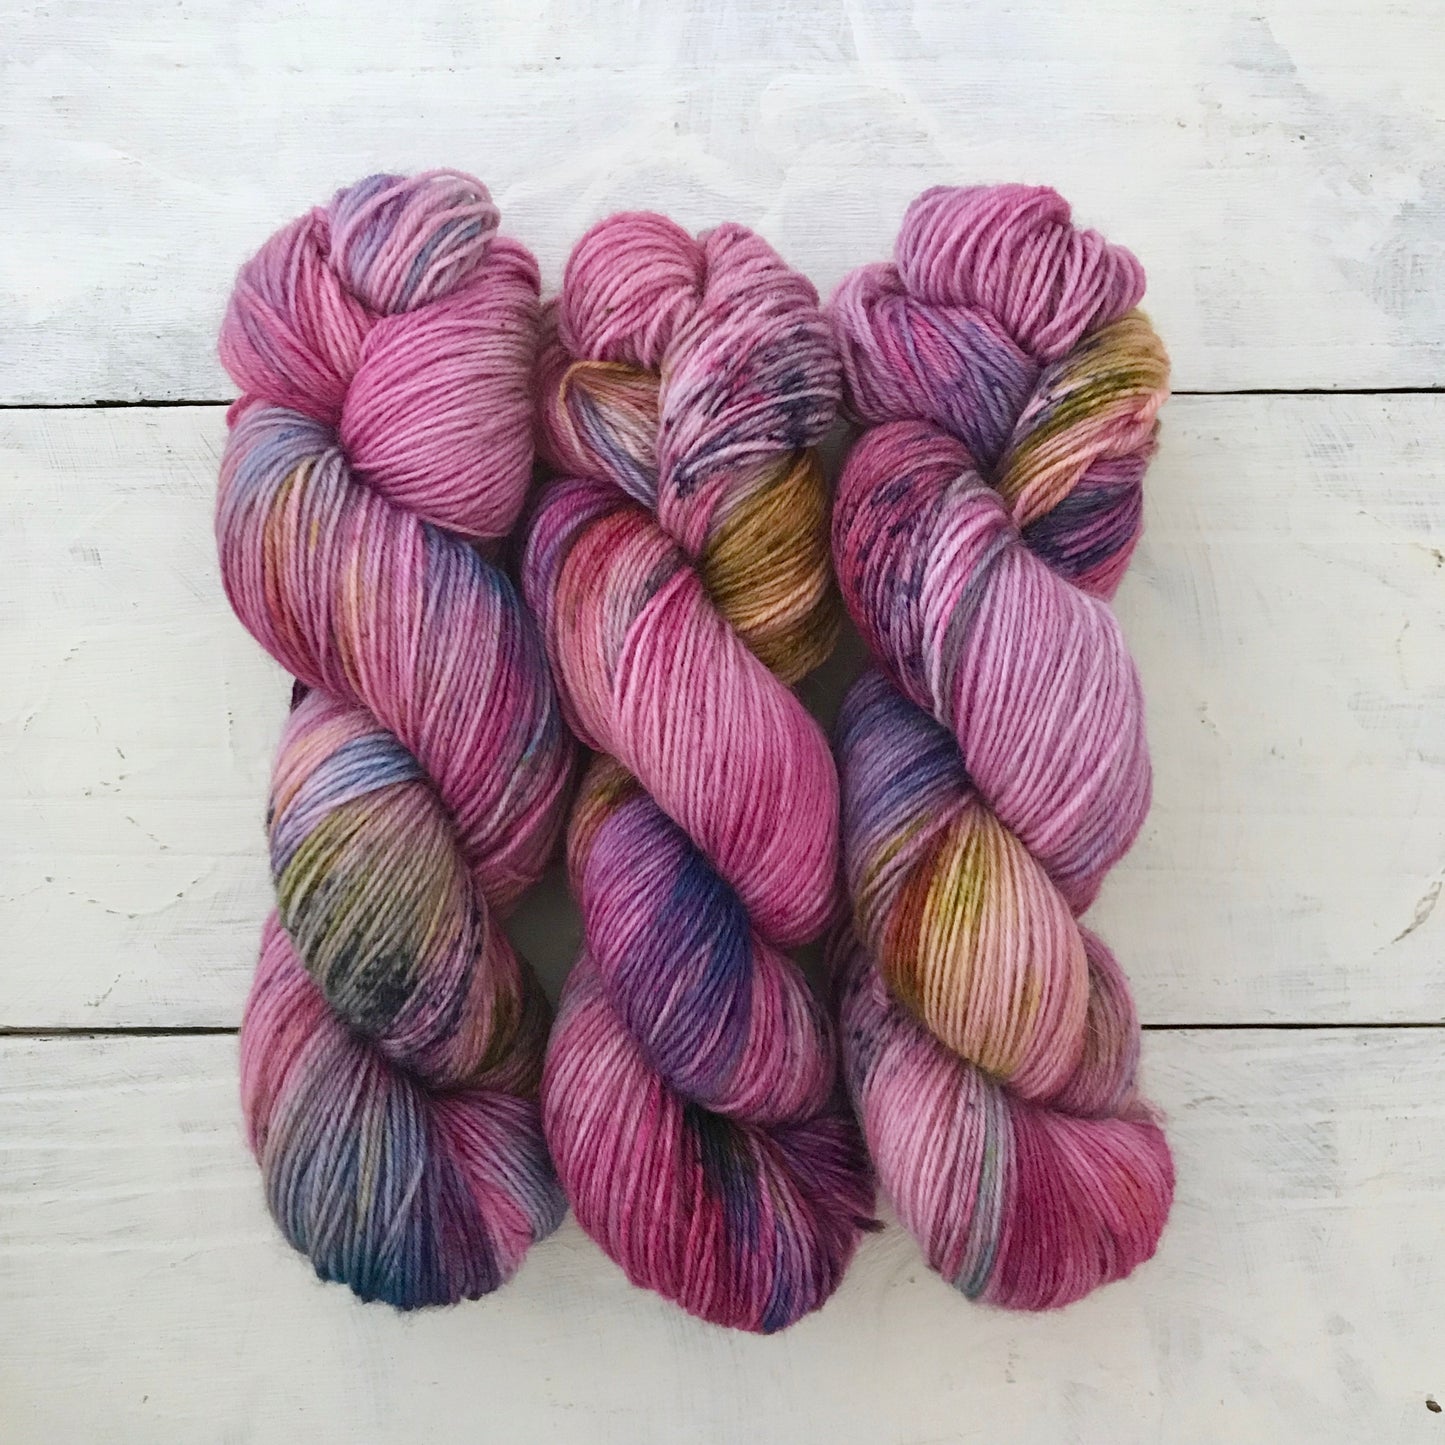 Hand-dyed yarn No.76 sock yarn "Verführung"